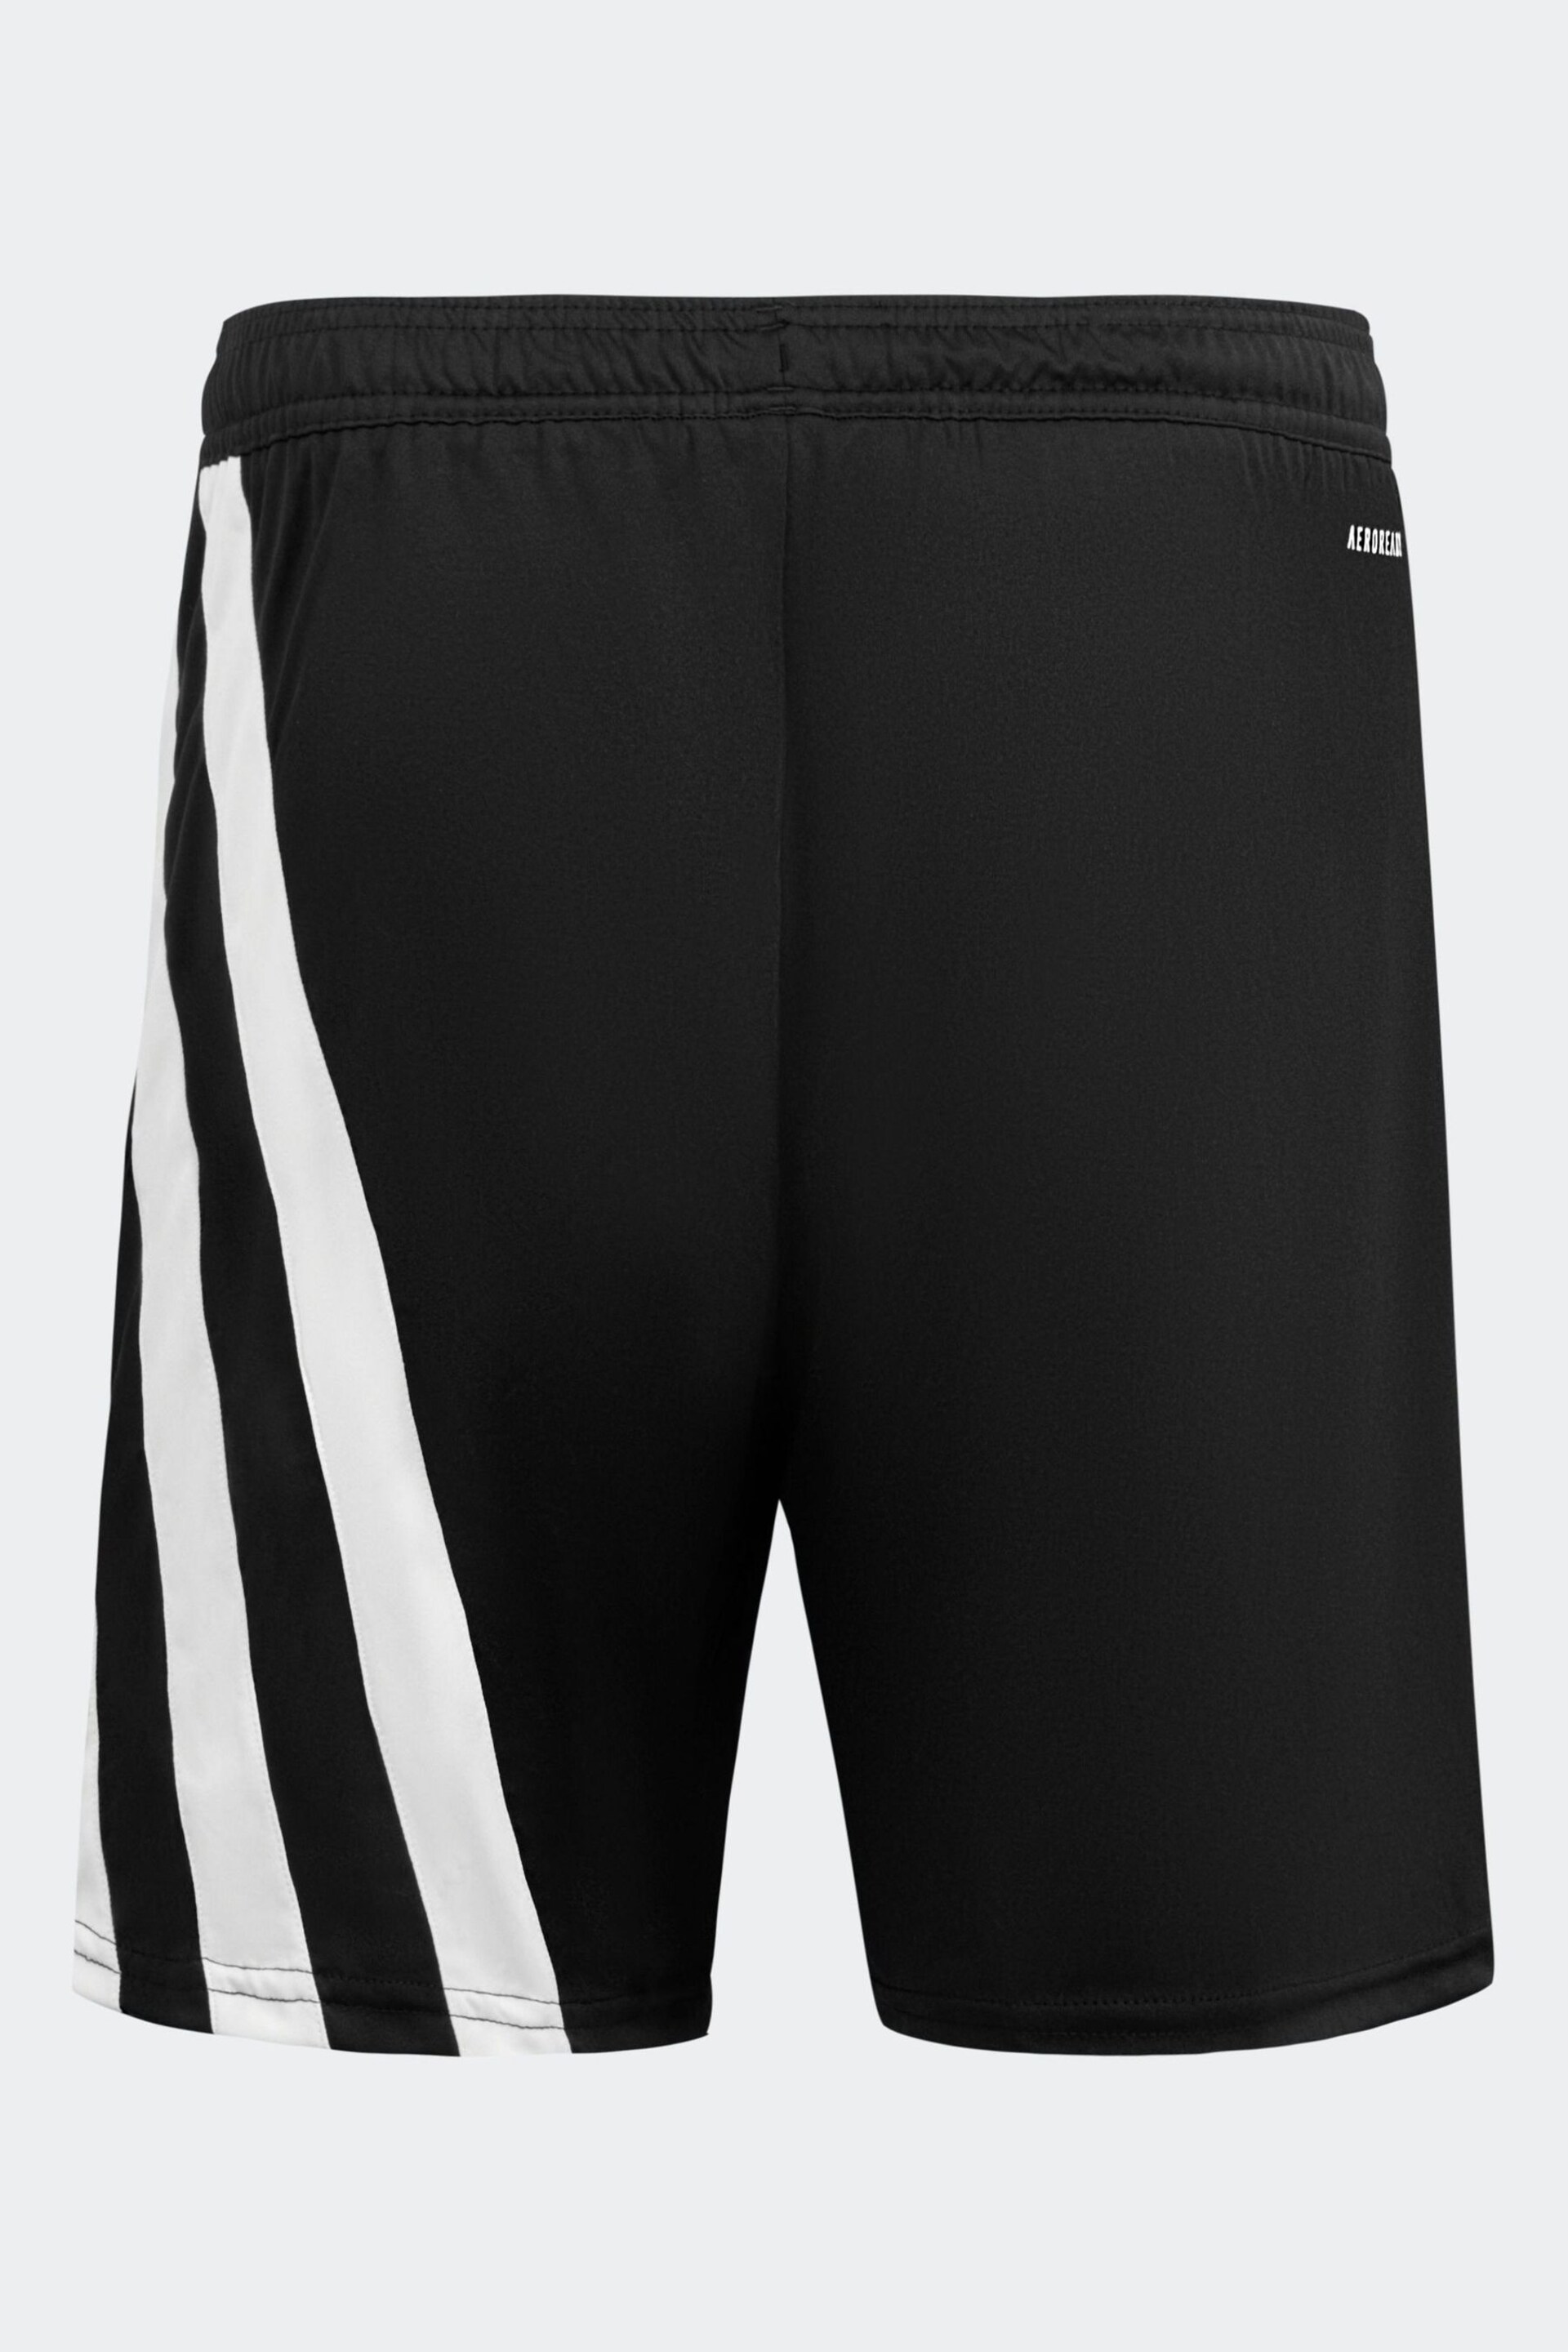 adidas Dark Black Fortore 23 Shorts - Image 4 of 4